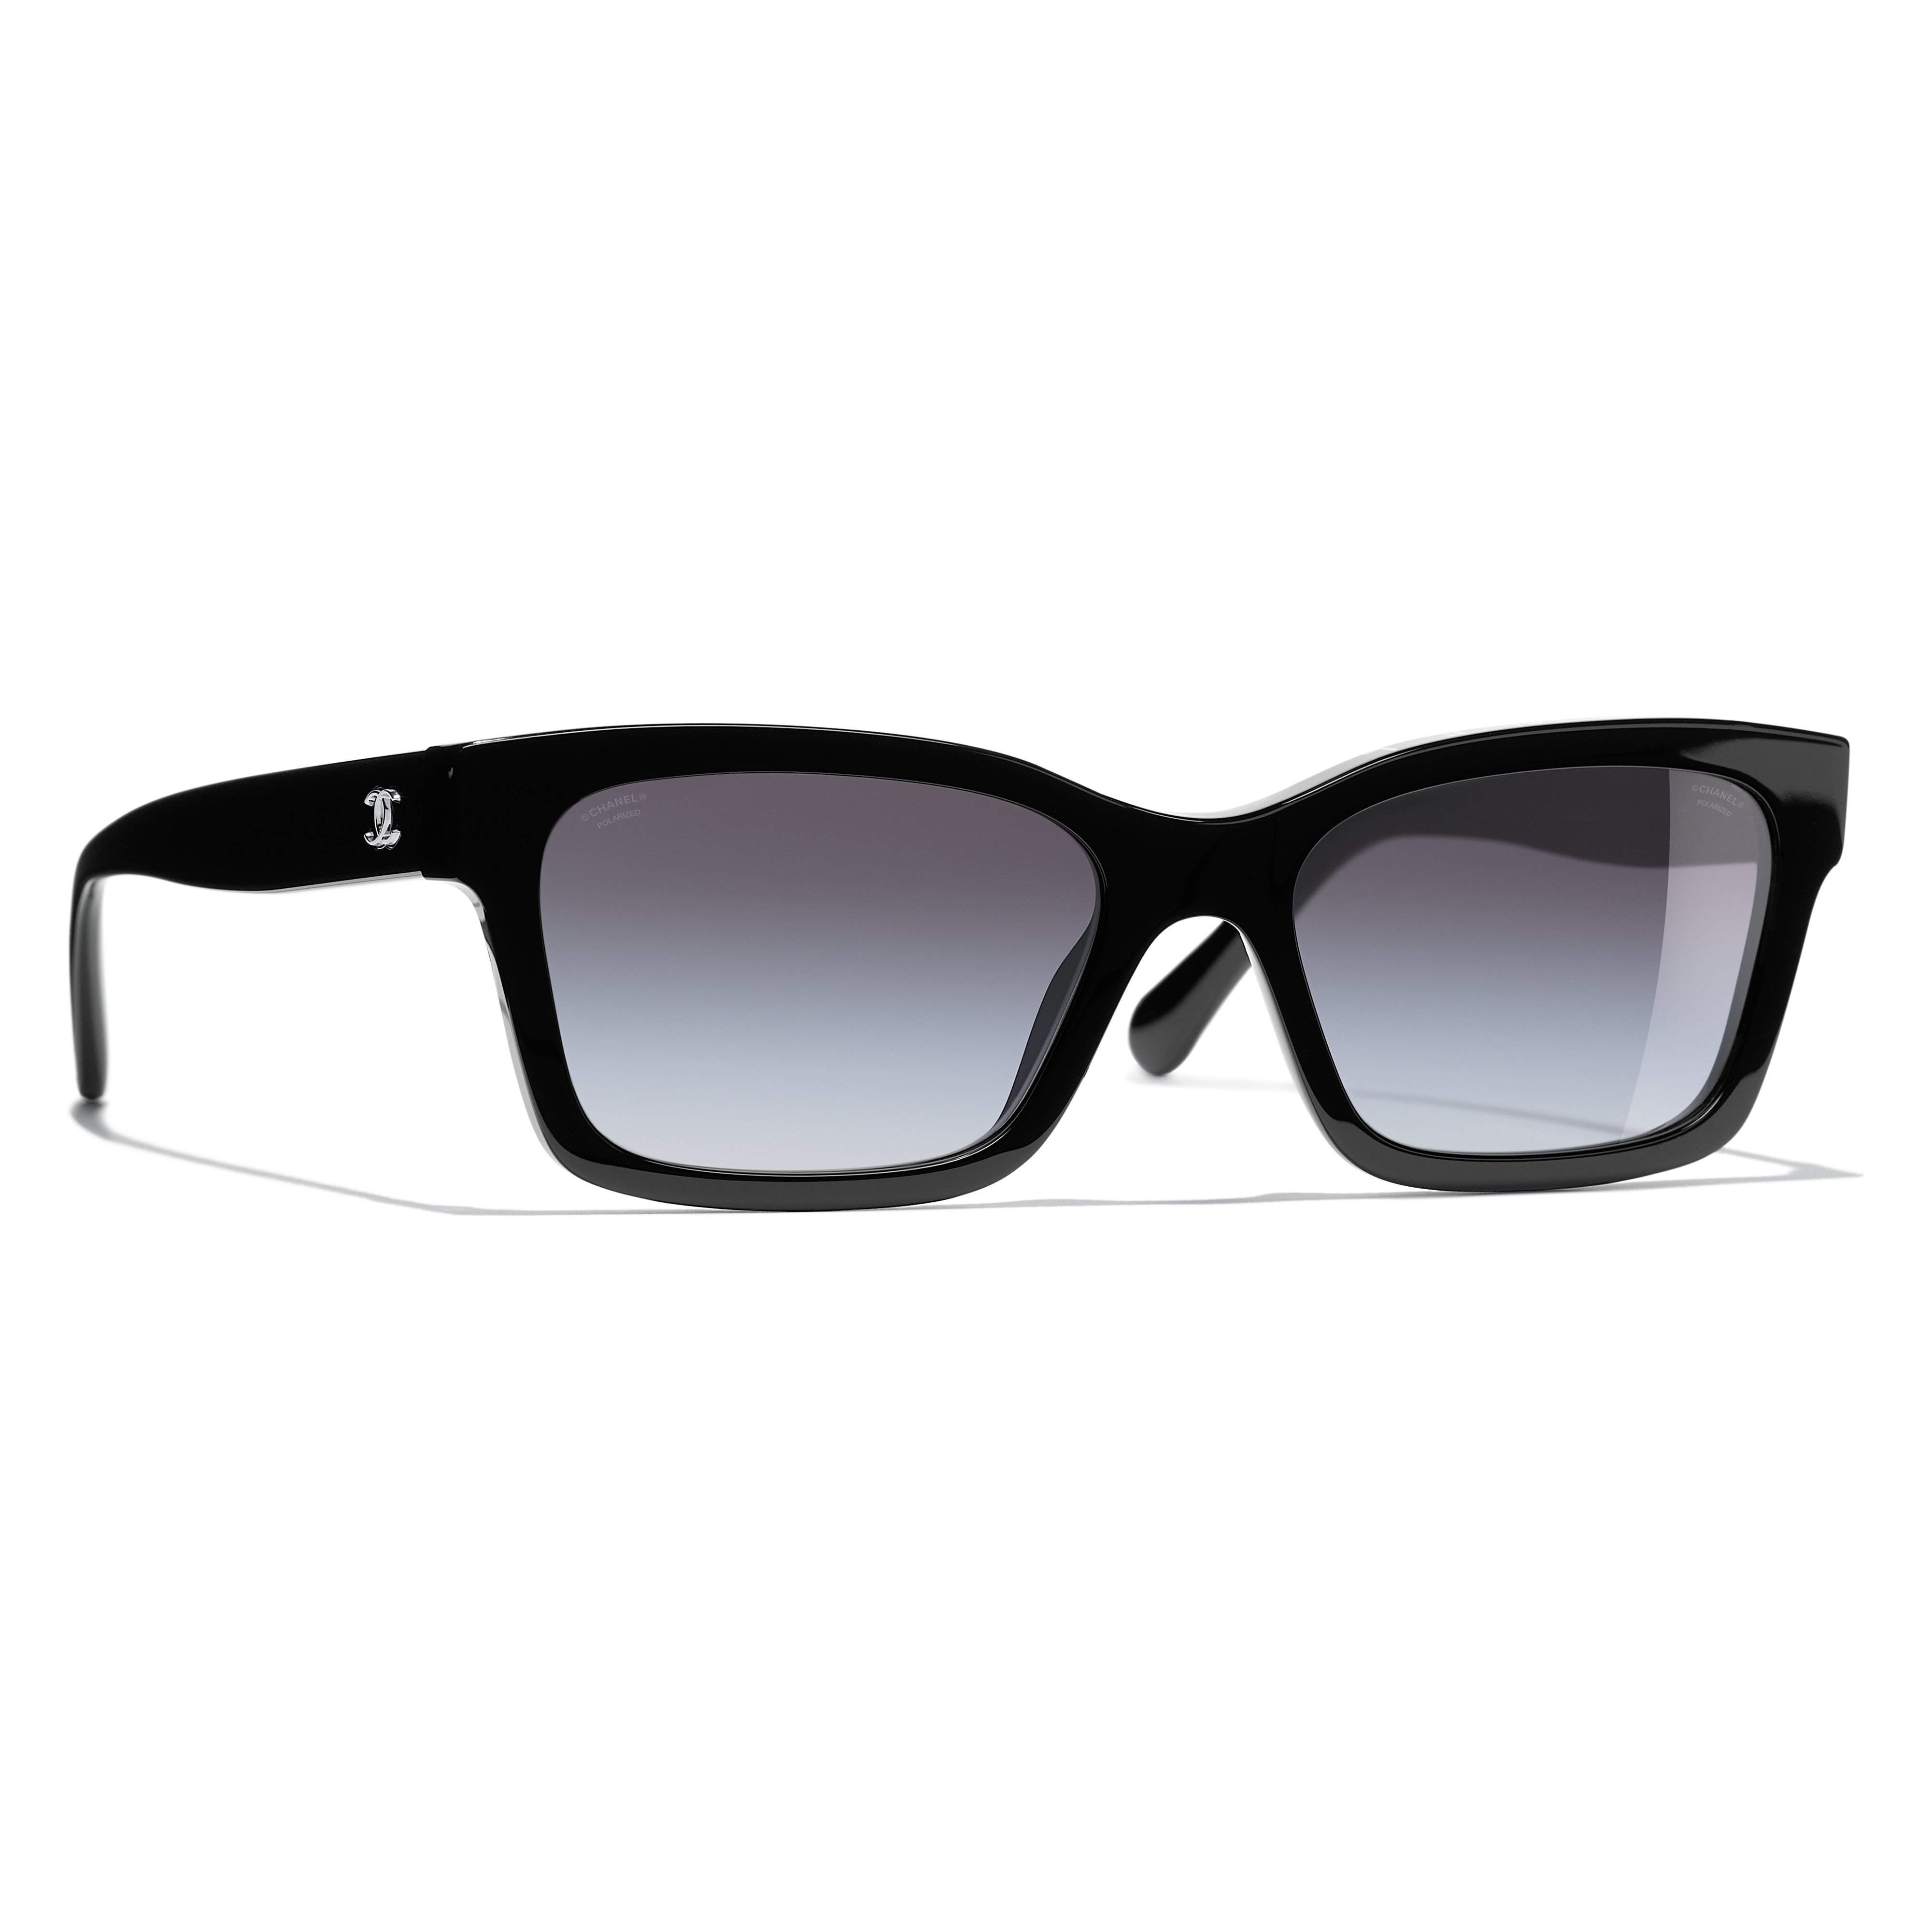 chanel sunglasses black with white trim